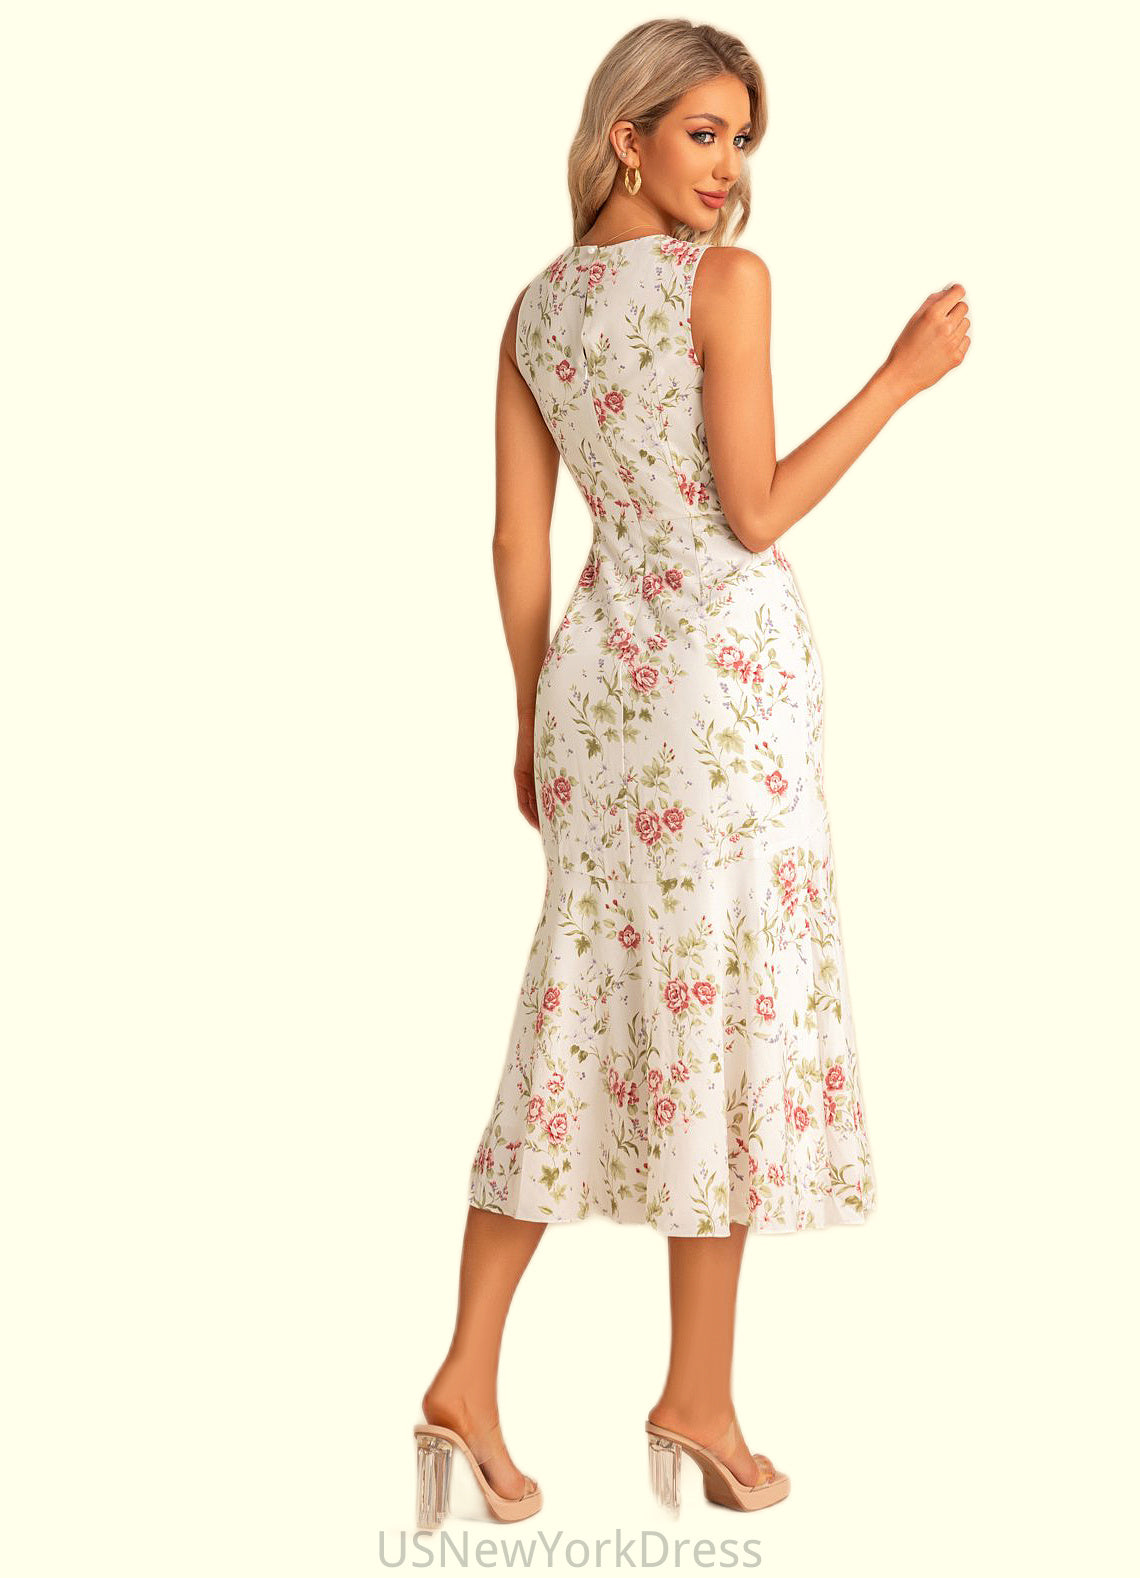 Gladys Trumpet/Mermaid Scoop Tea-Length Polyester Bridesmaid Dress With Floral Print DJP0022566